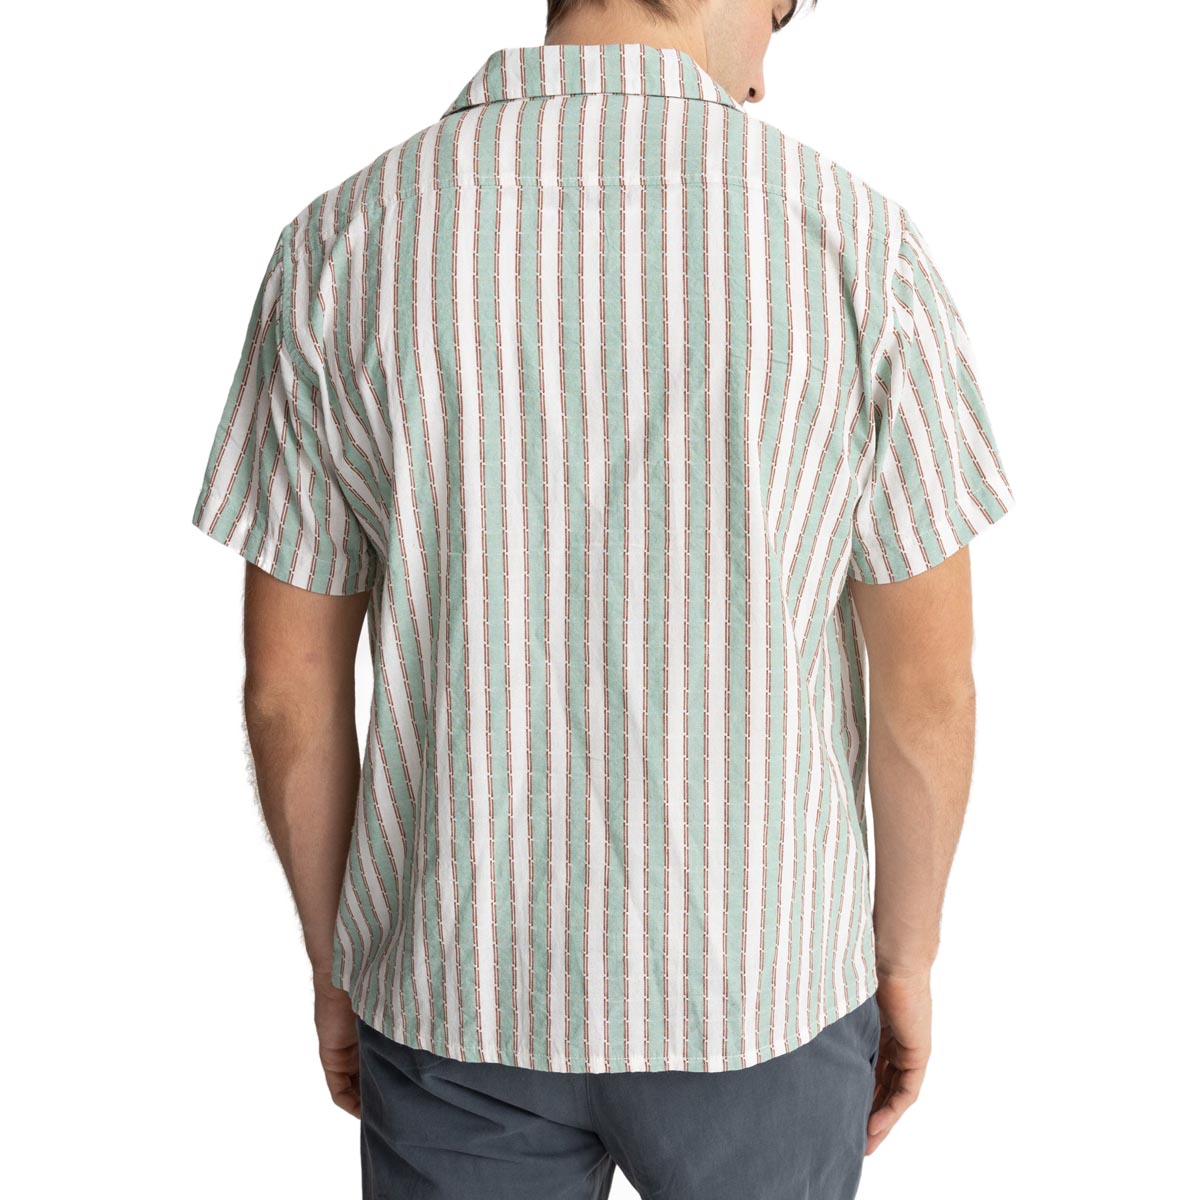 Rhythm Vacation Stripe Shirt - Sea Green image 2